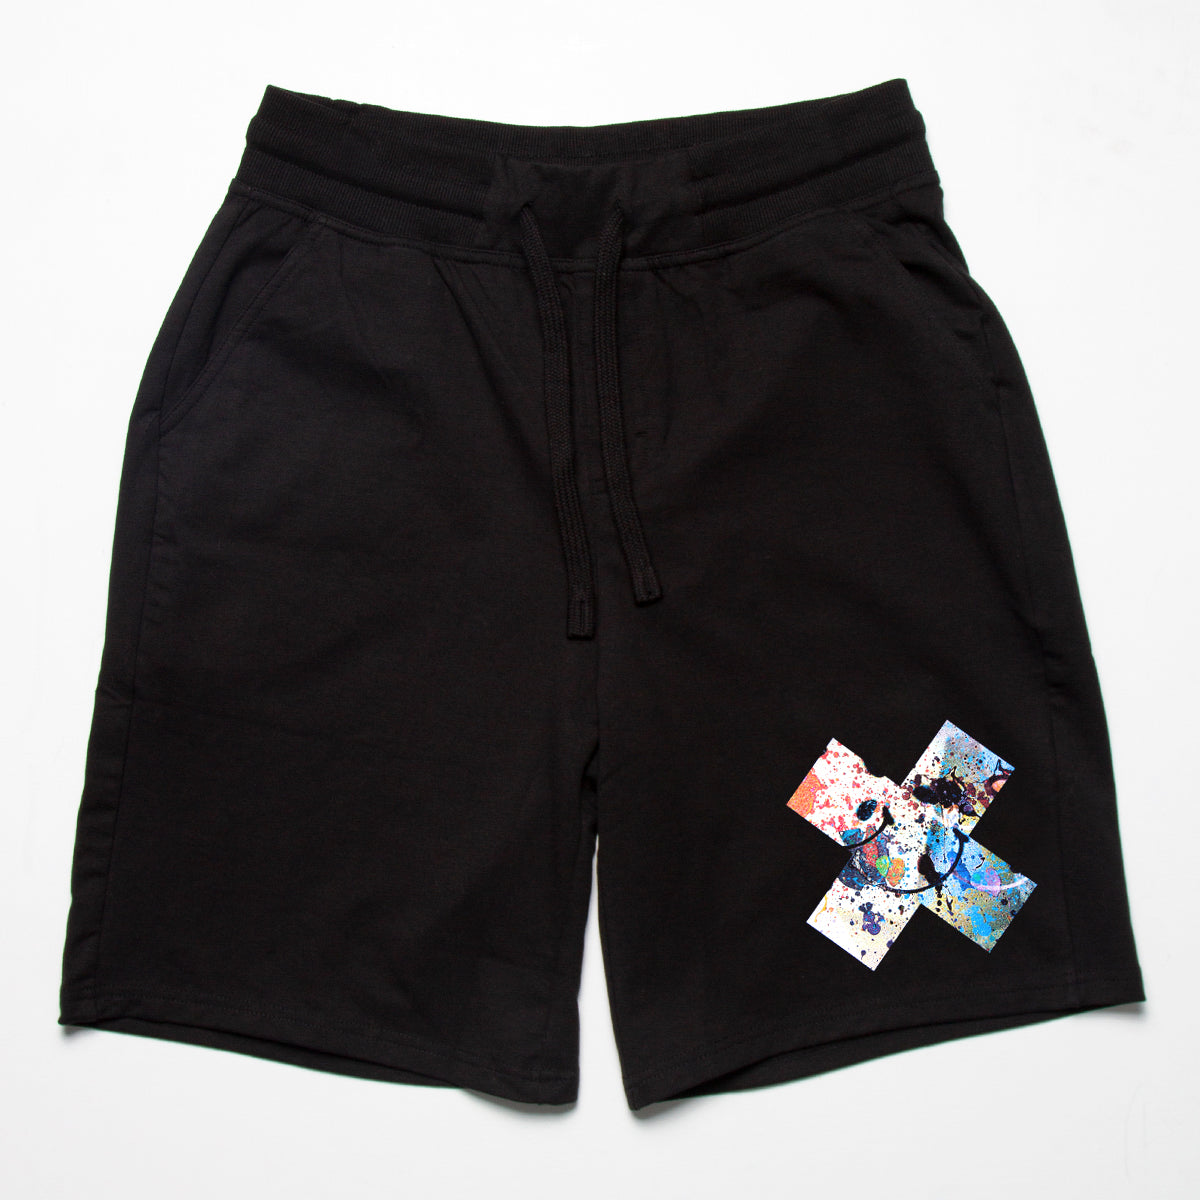 Smiley 1 X Imprint - Jersey Shorts - Black